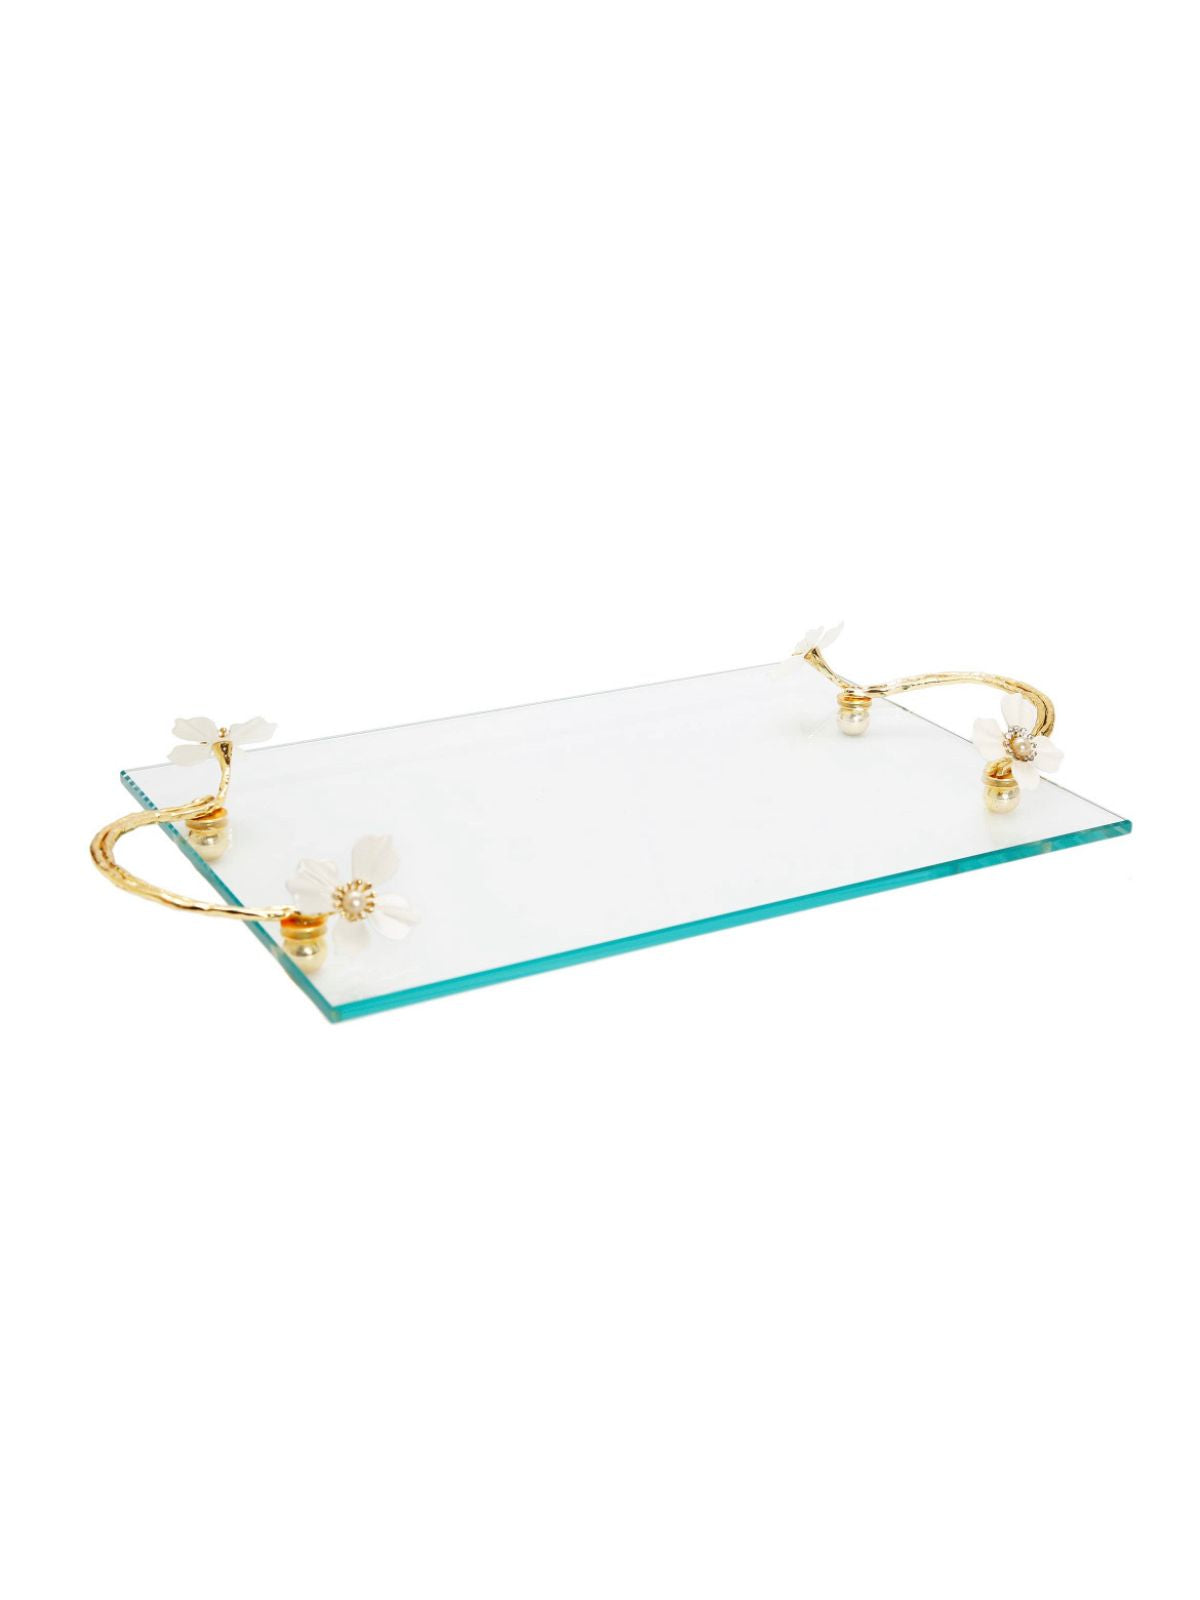 Rectangular Glass Tray with Cherry Blossom Designed Handles.